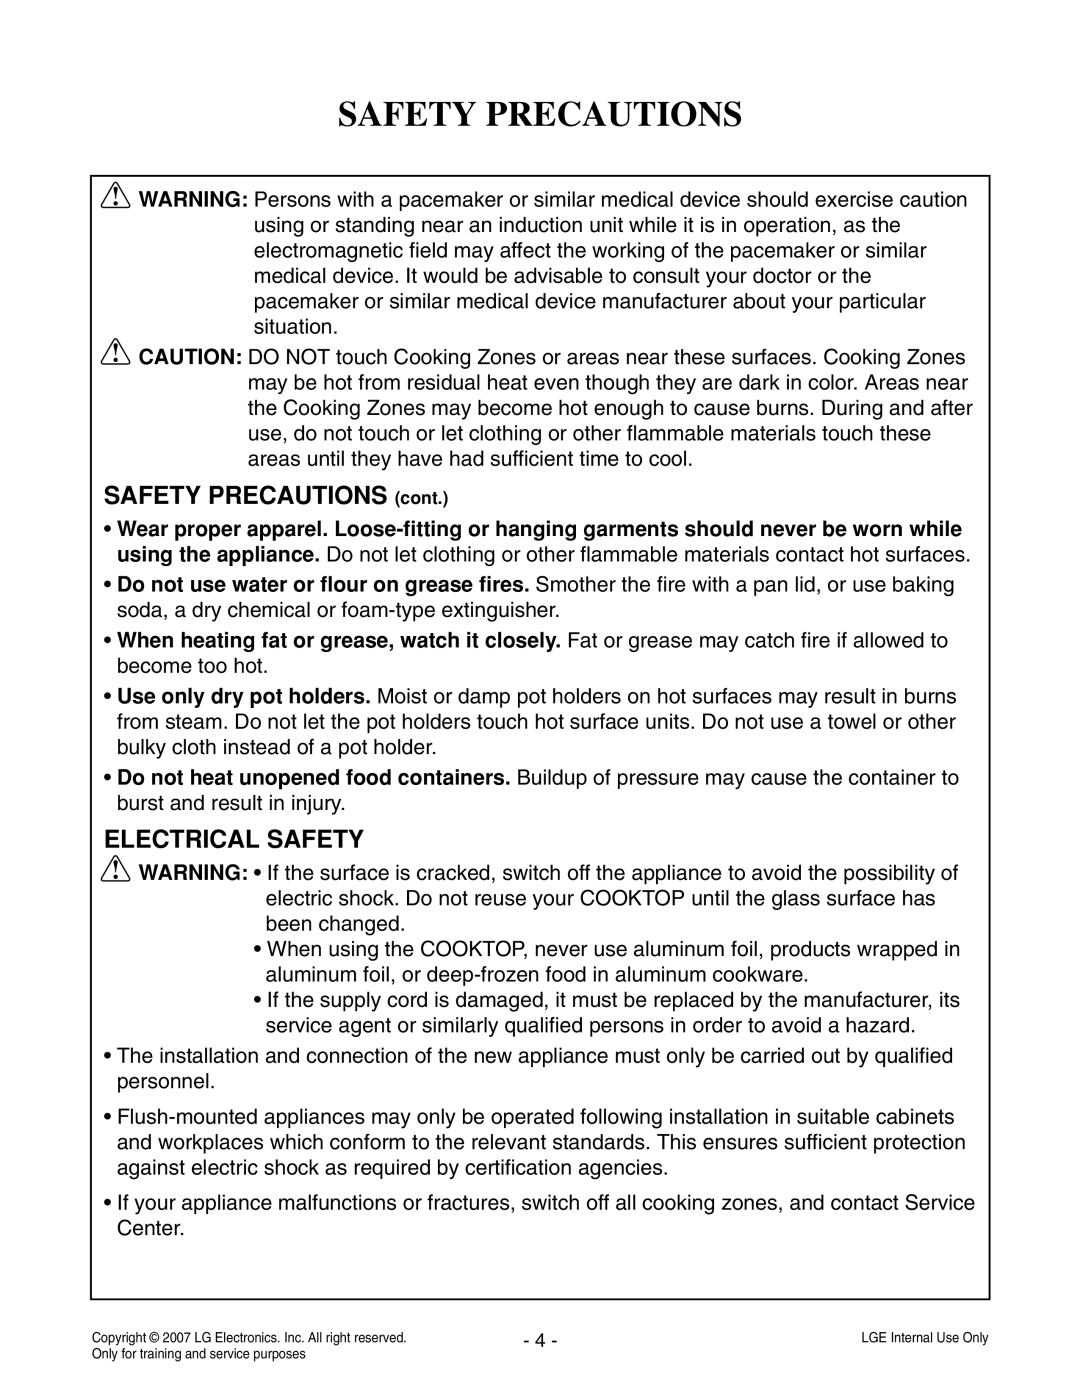 LG Electronics LCE30845 service manual Safety Precautions, SAFETY PRECAUTIONS cont, Electrical Safety 